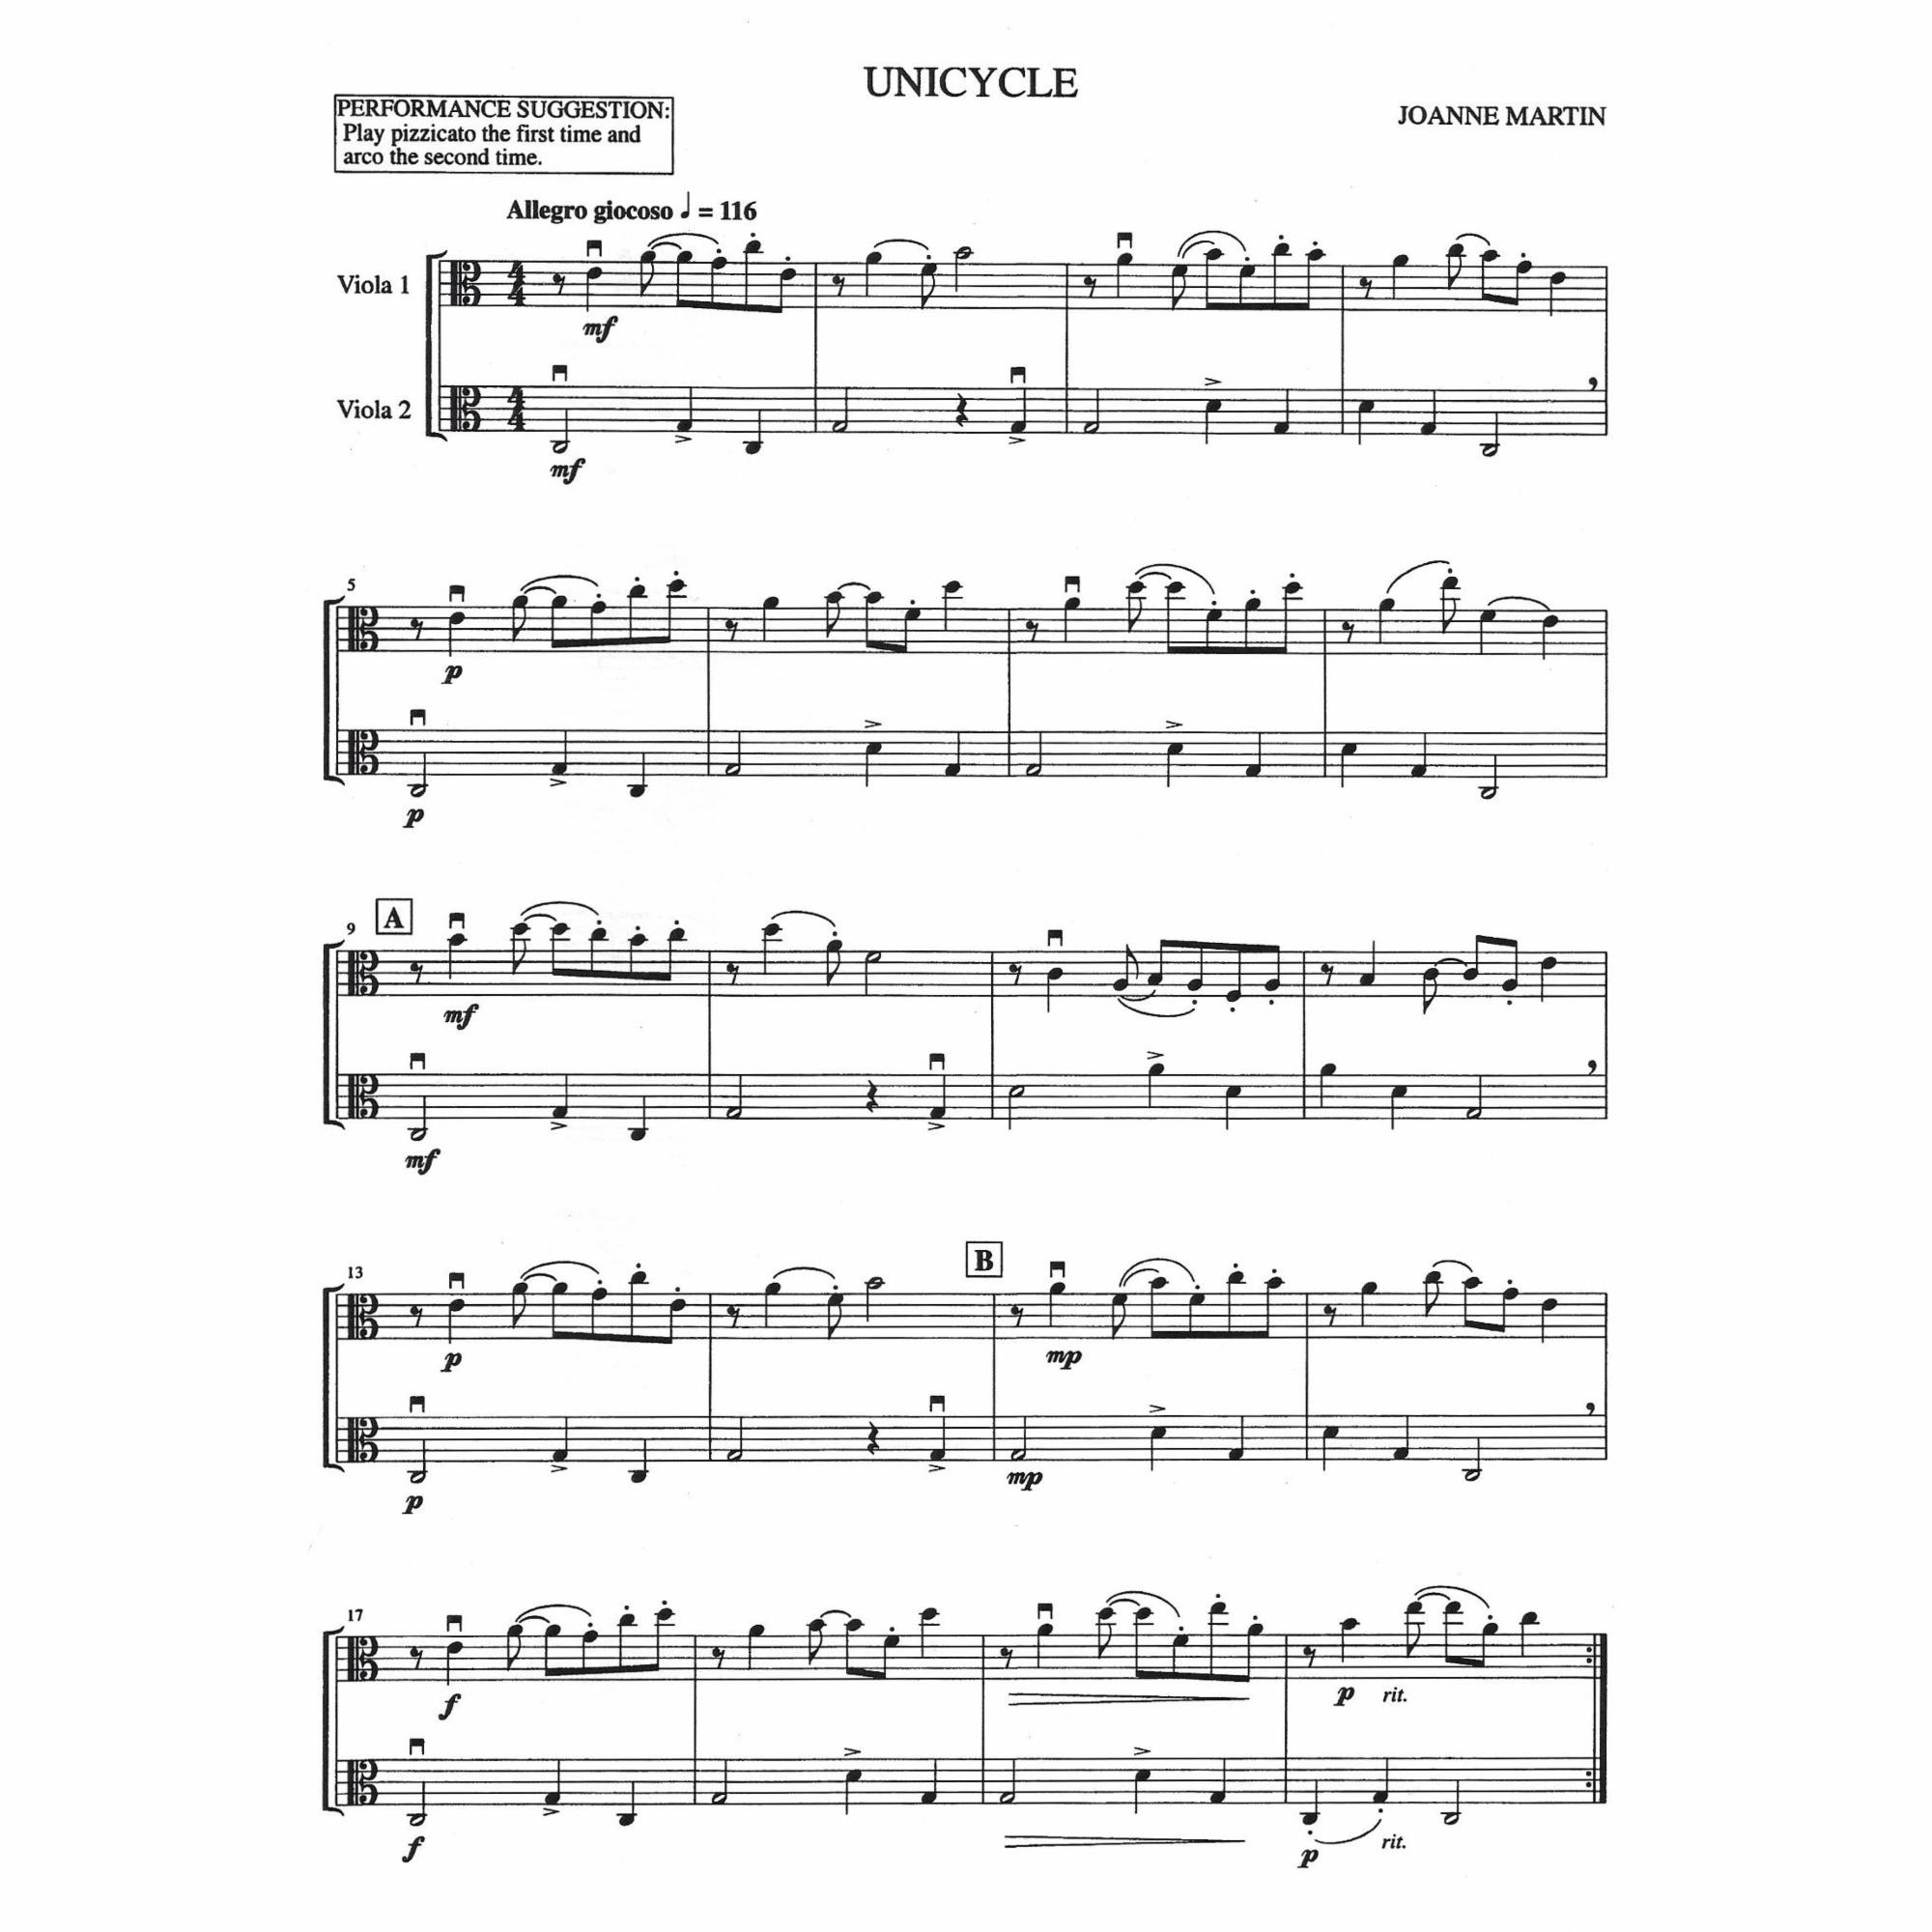 Sample: Vol. 1, 2-4 Violas (Pg. 7)